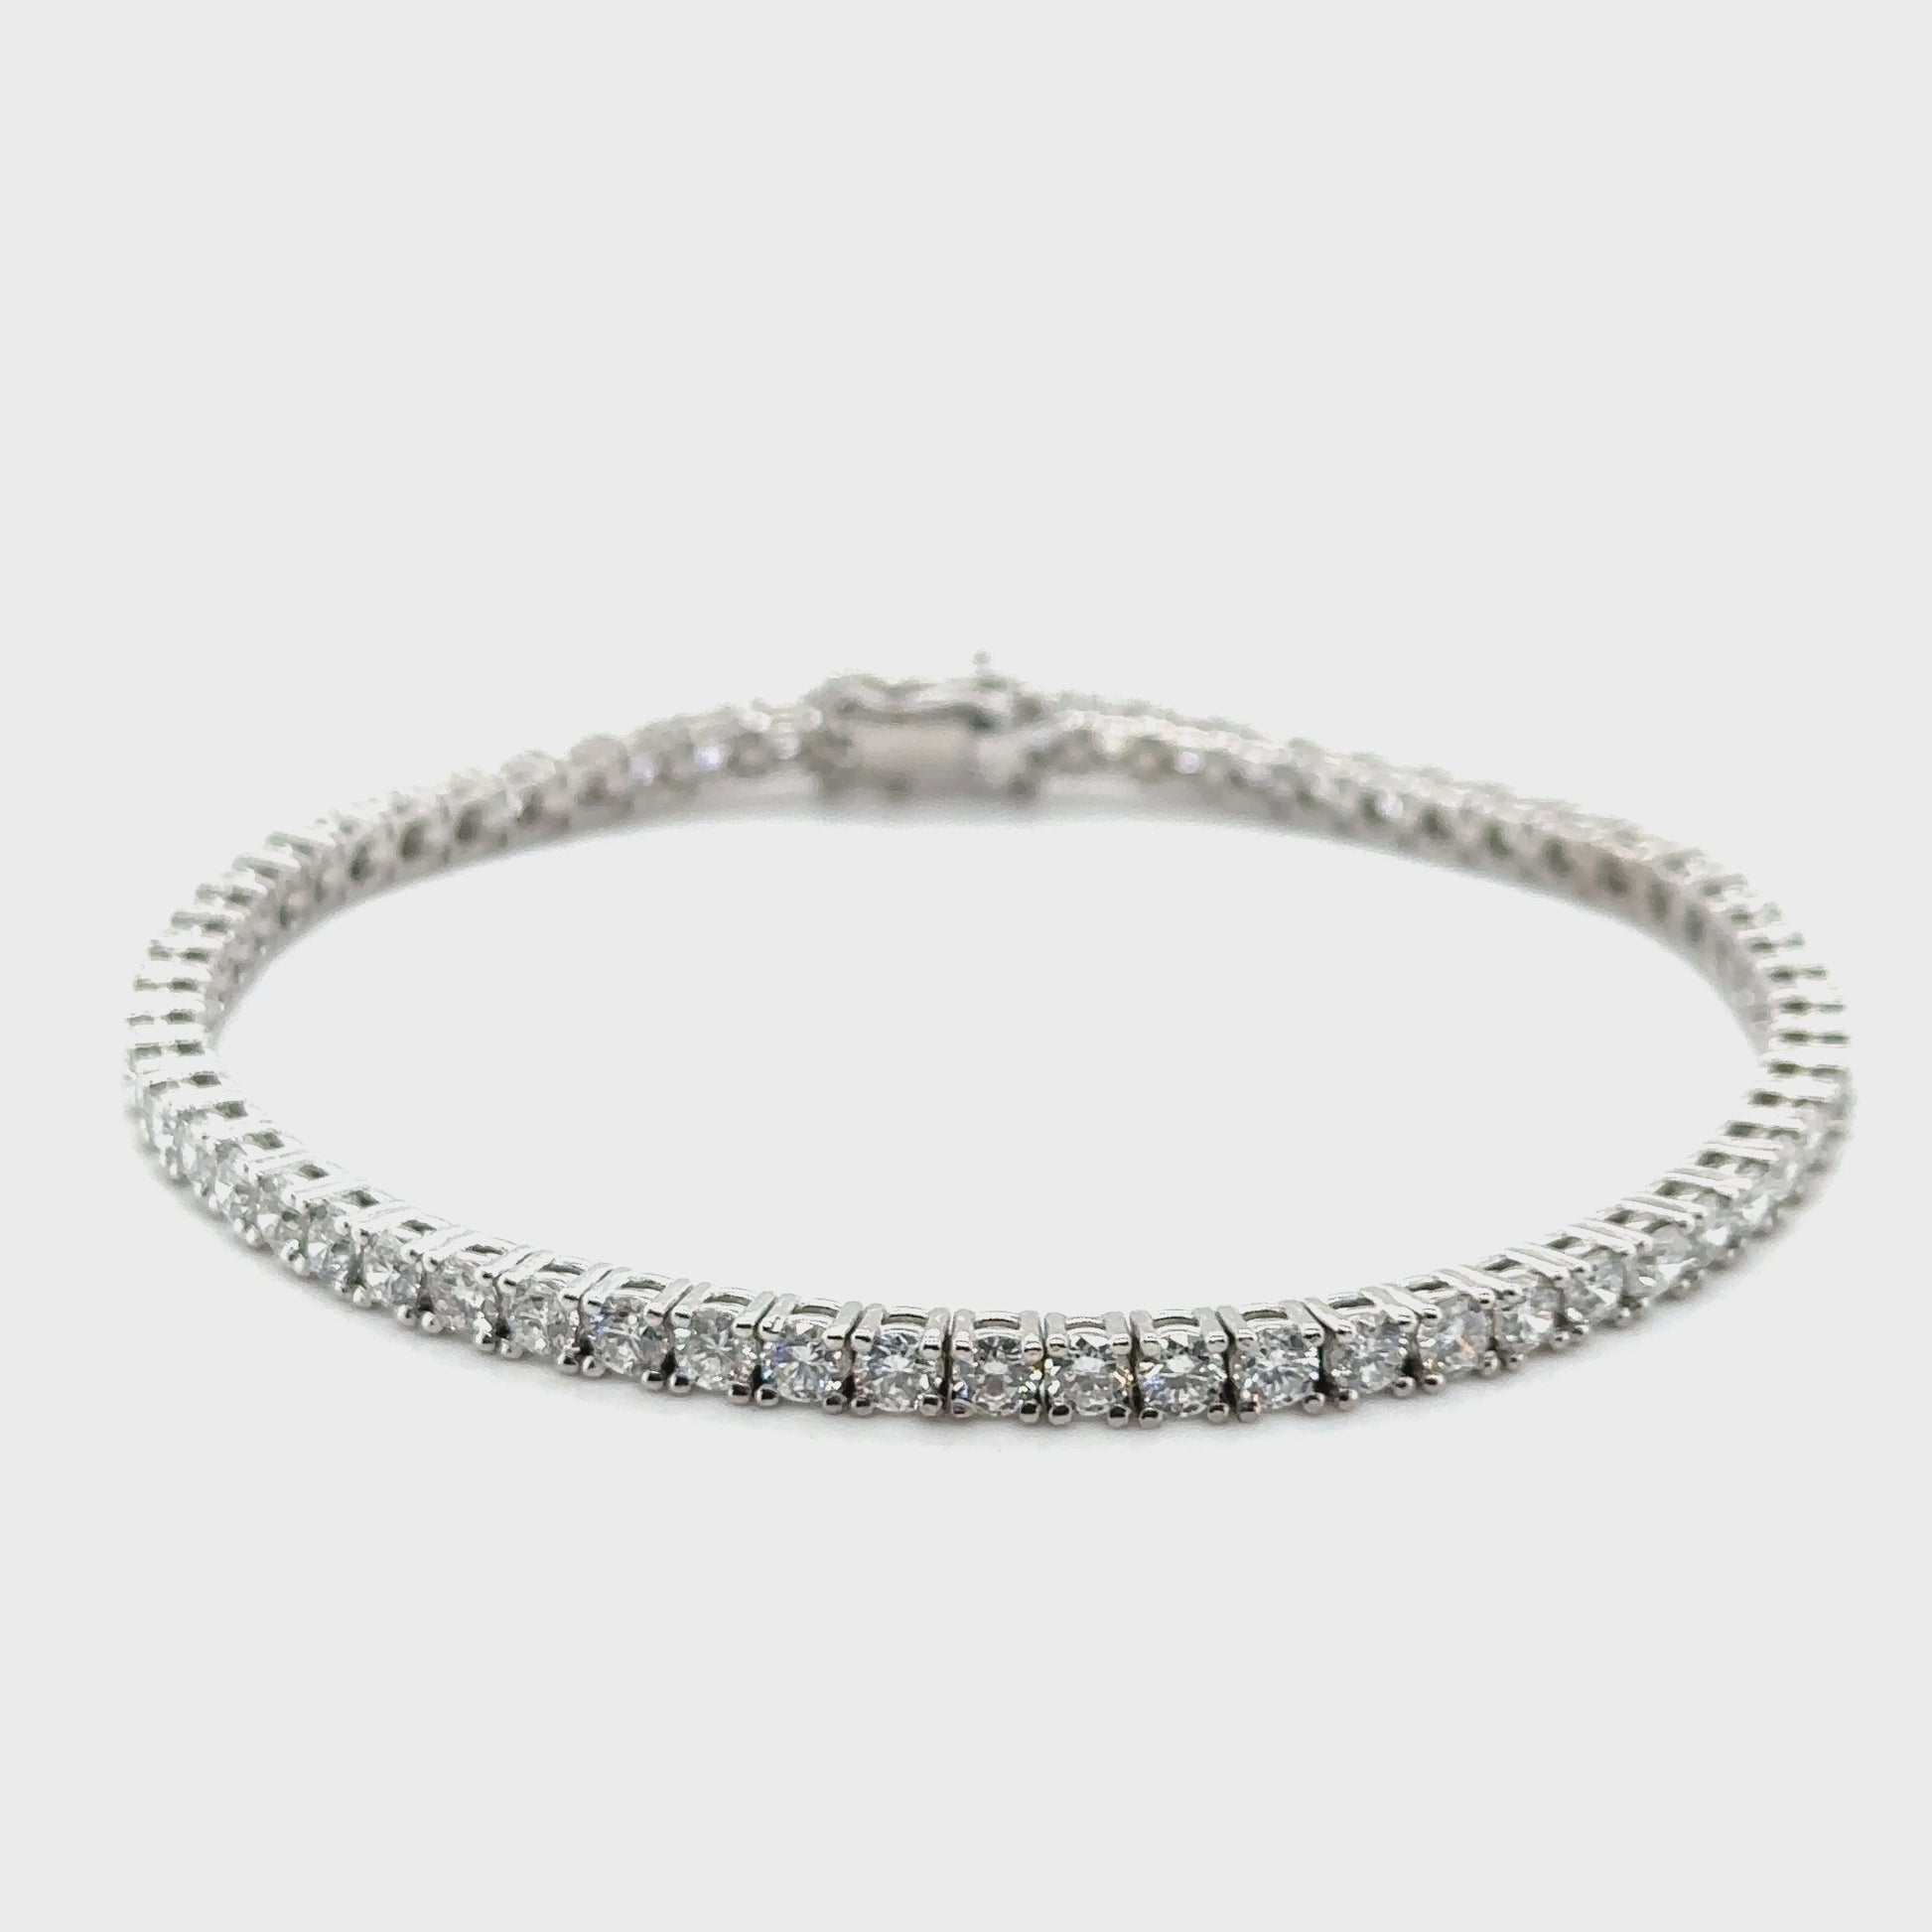 A sparkling diamond tennis bracelet, elegant jewelry accessory, wrist adornment, luxury diamond accessory, sophisticated bracelet, classic diamond jewelry piece.